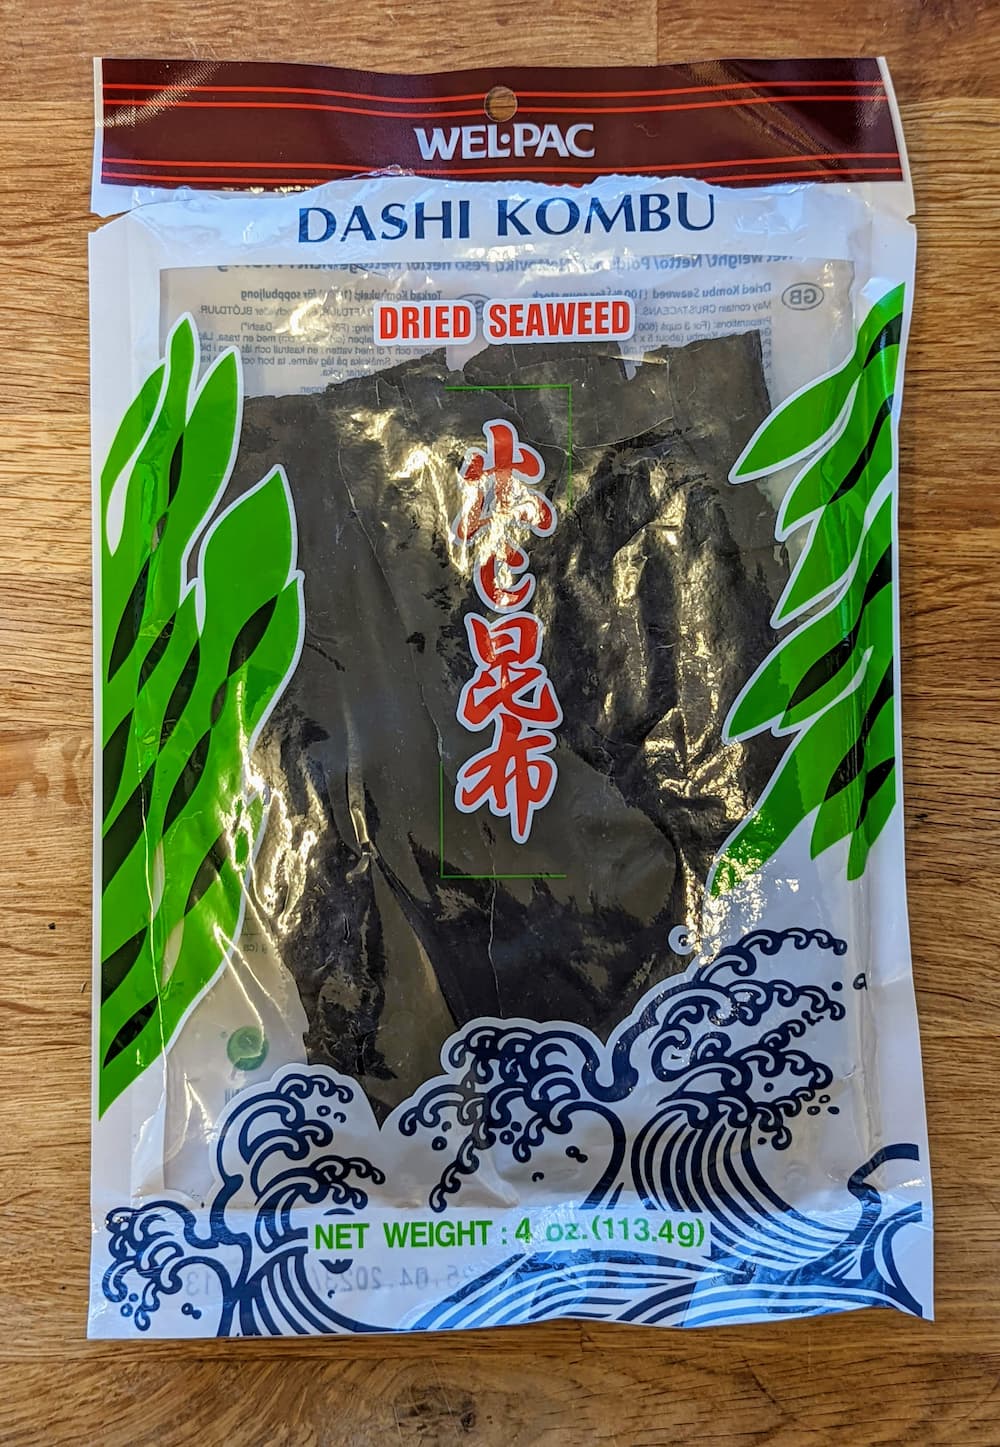 A pack of Wel-Pac brand dried kombu for dashi